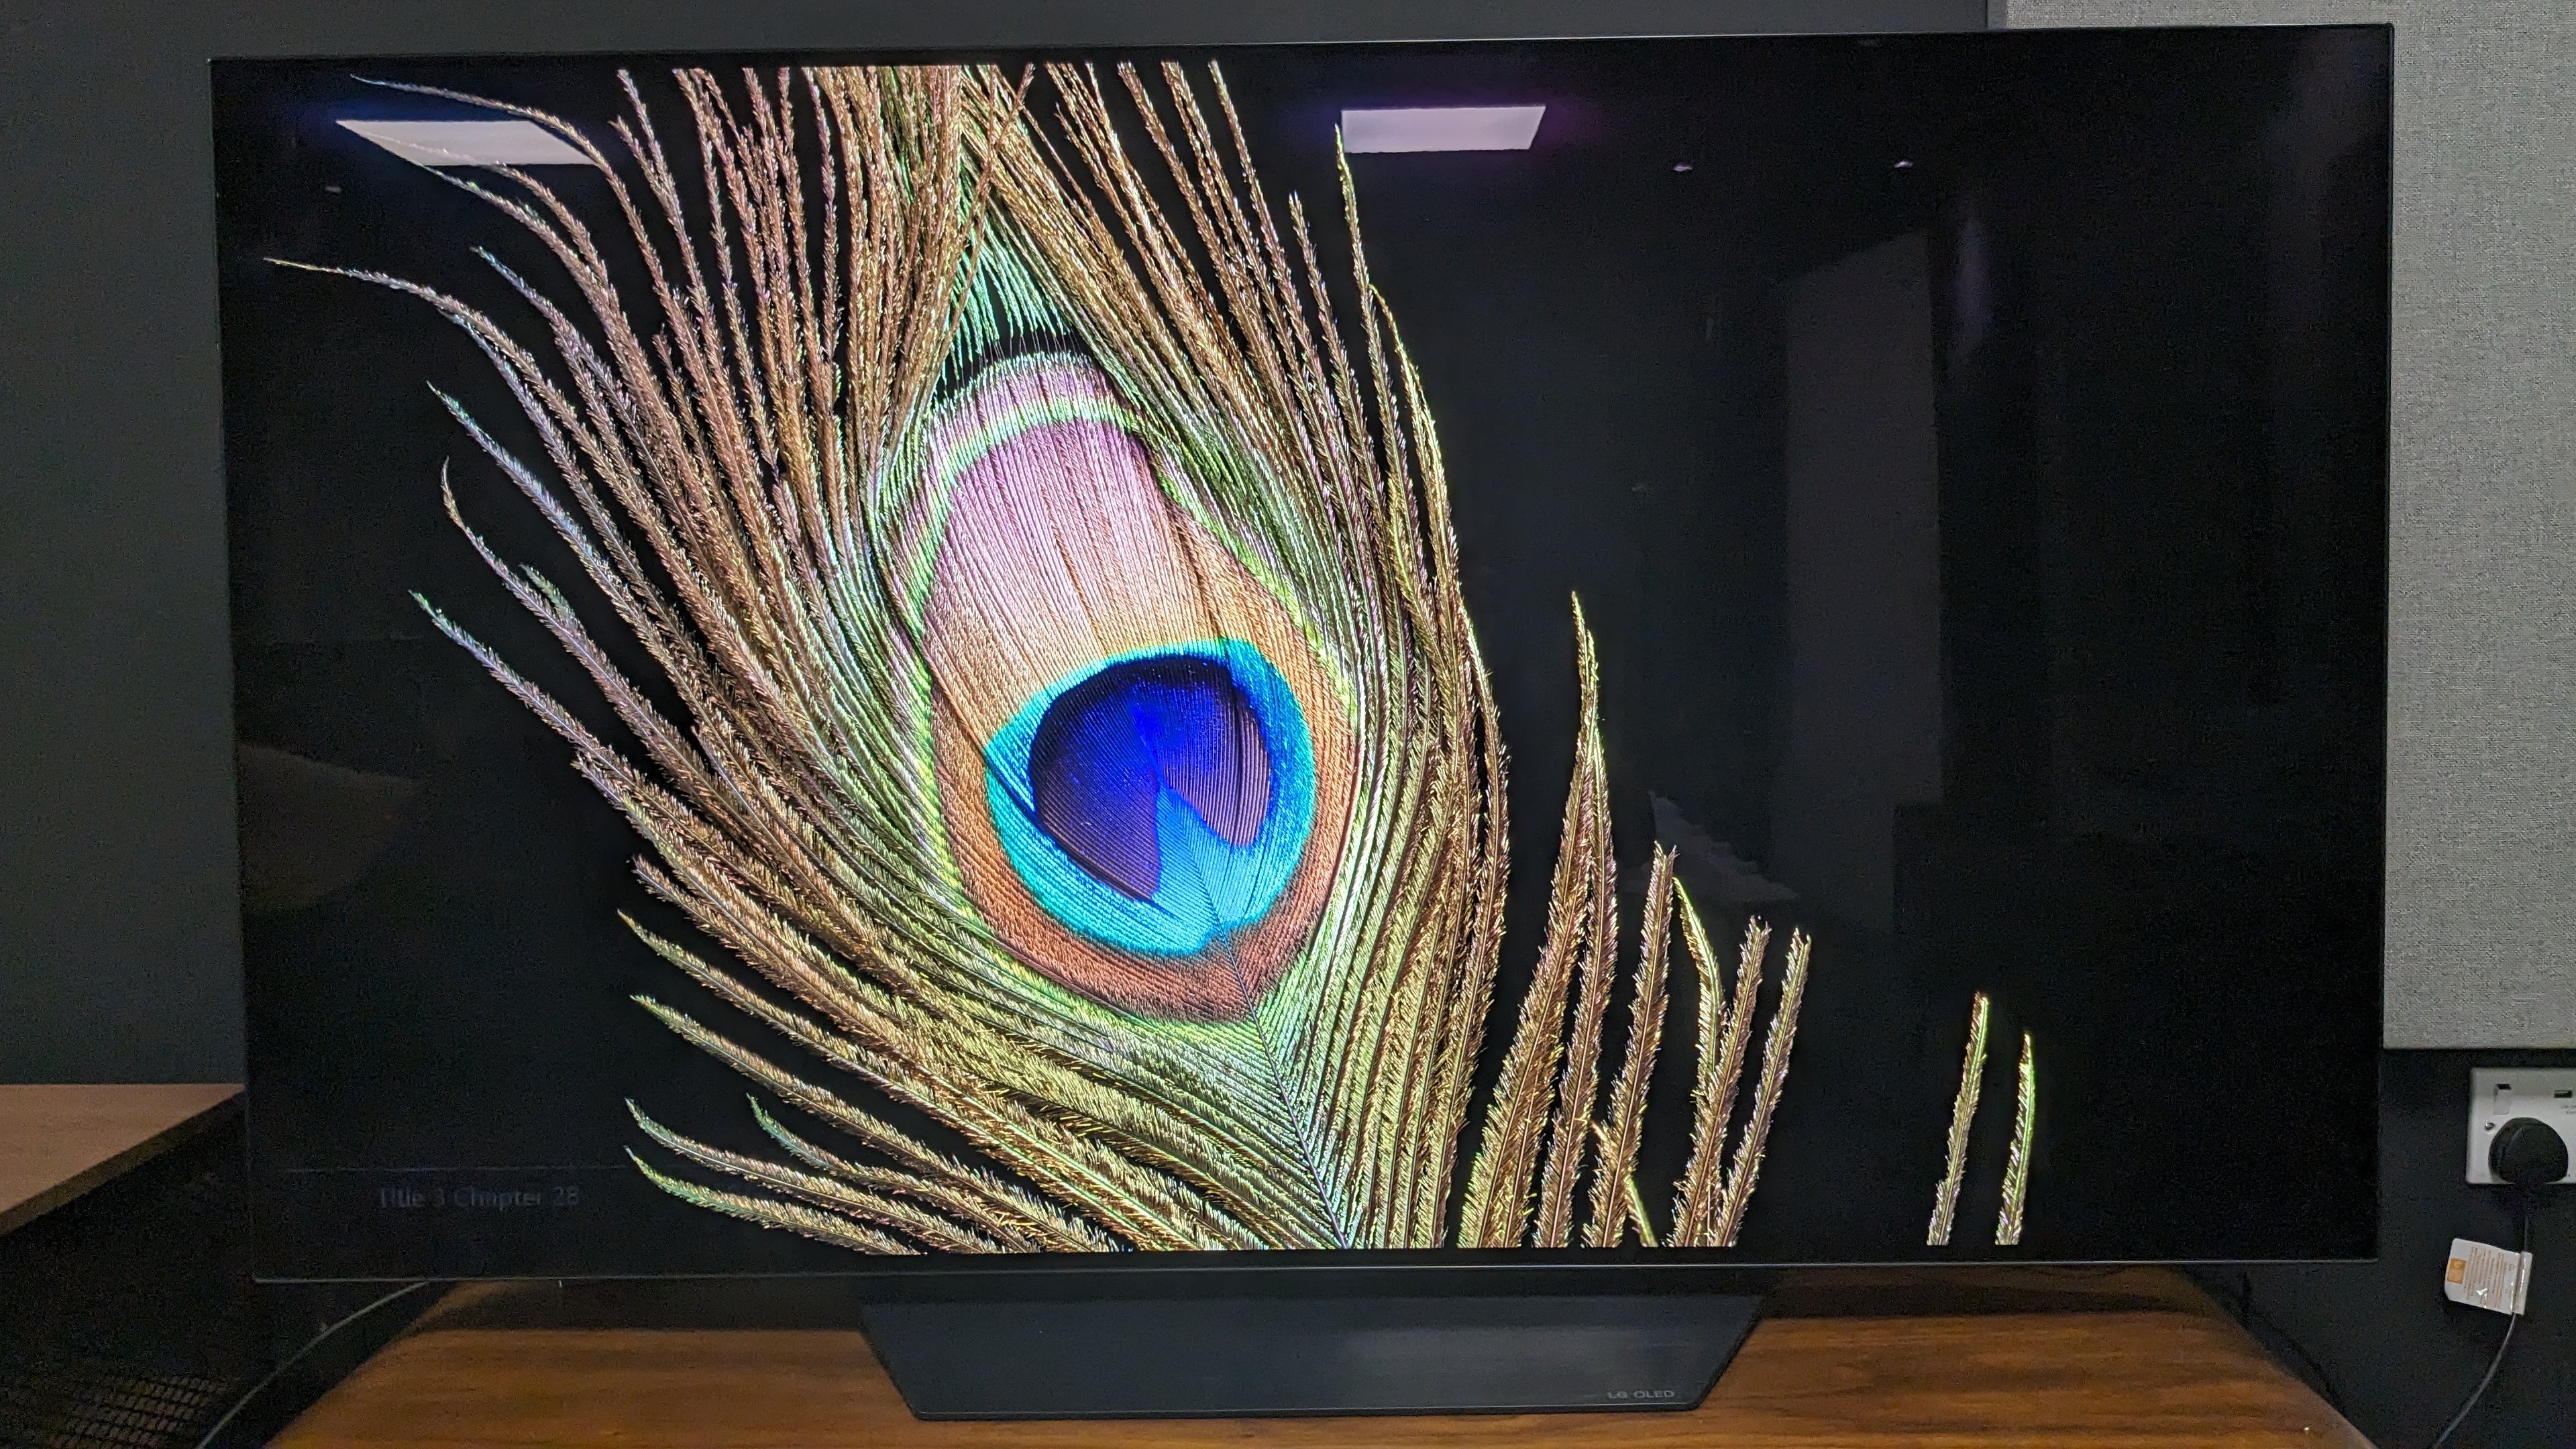 Televisor LG B3 que muestra una pluma de pavo real en la pantalla